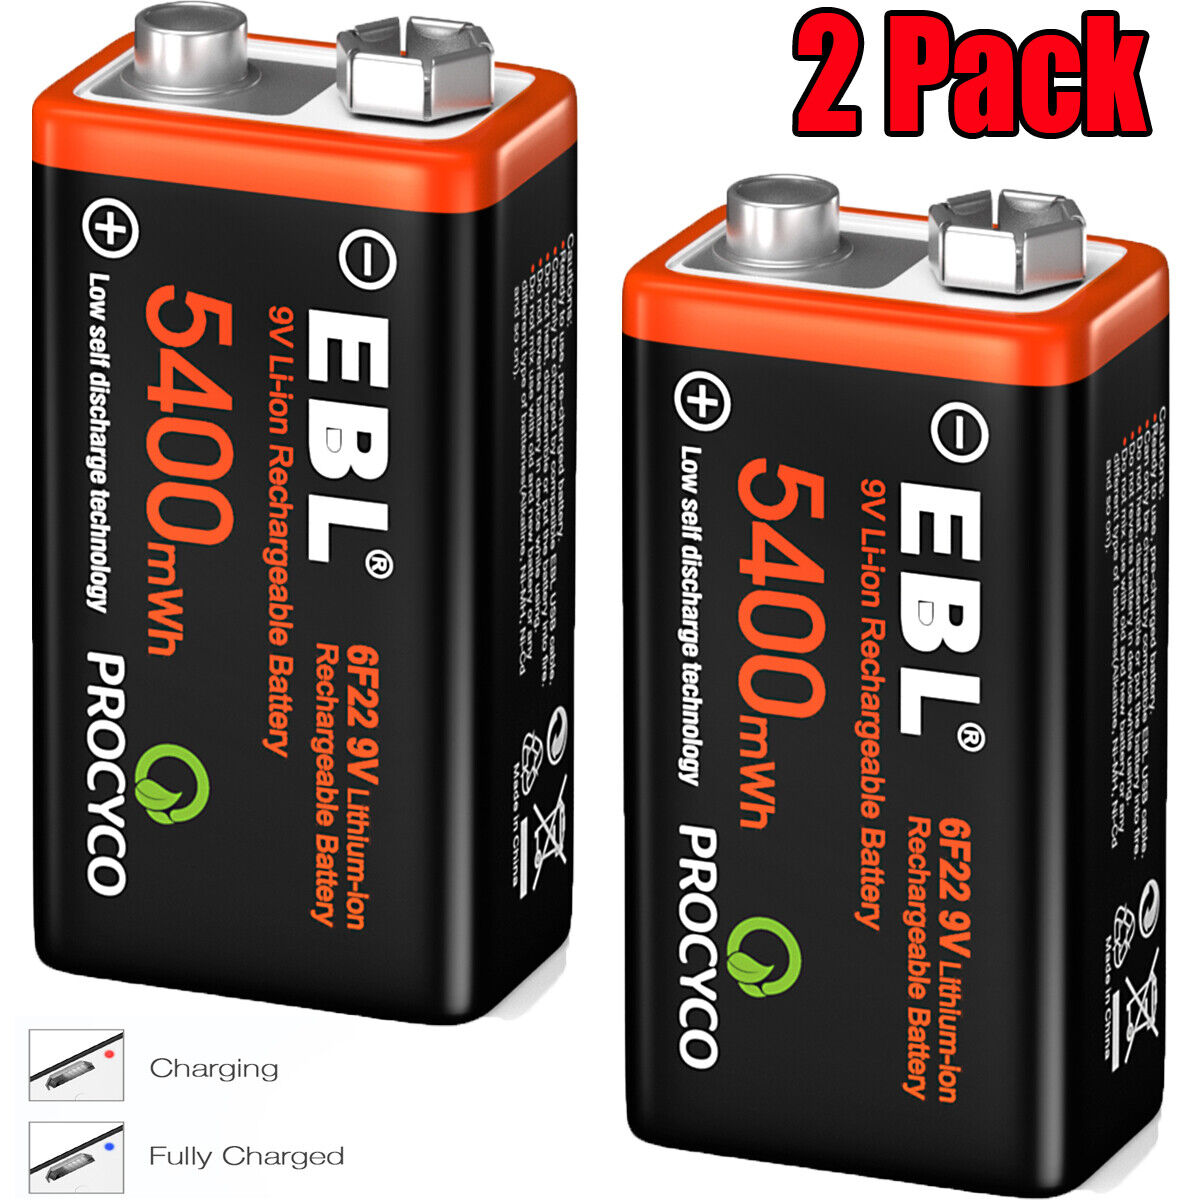 2Pack EBL USB Rechargeable 9V Lithium LI-ion Battery Batteries 5400mWh 9 Volt US